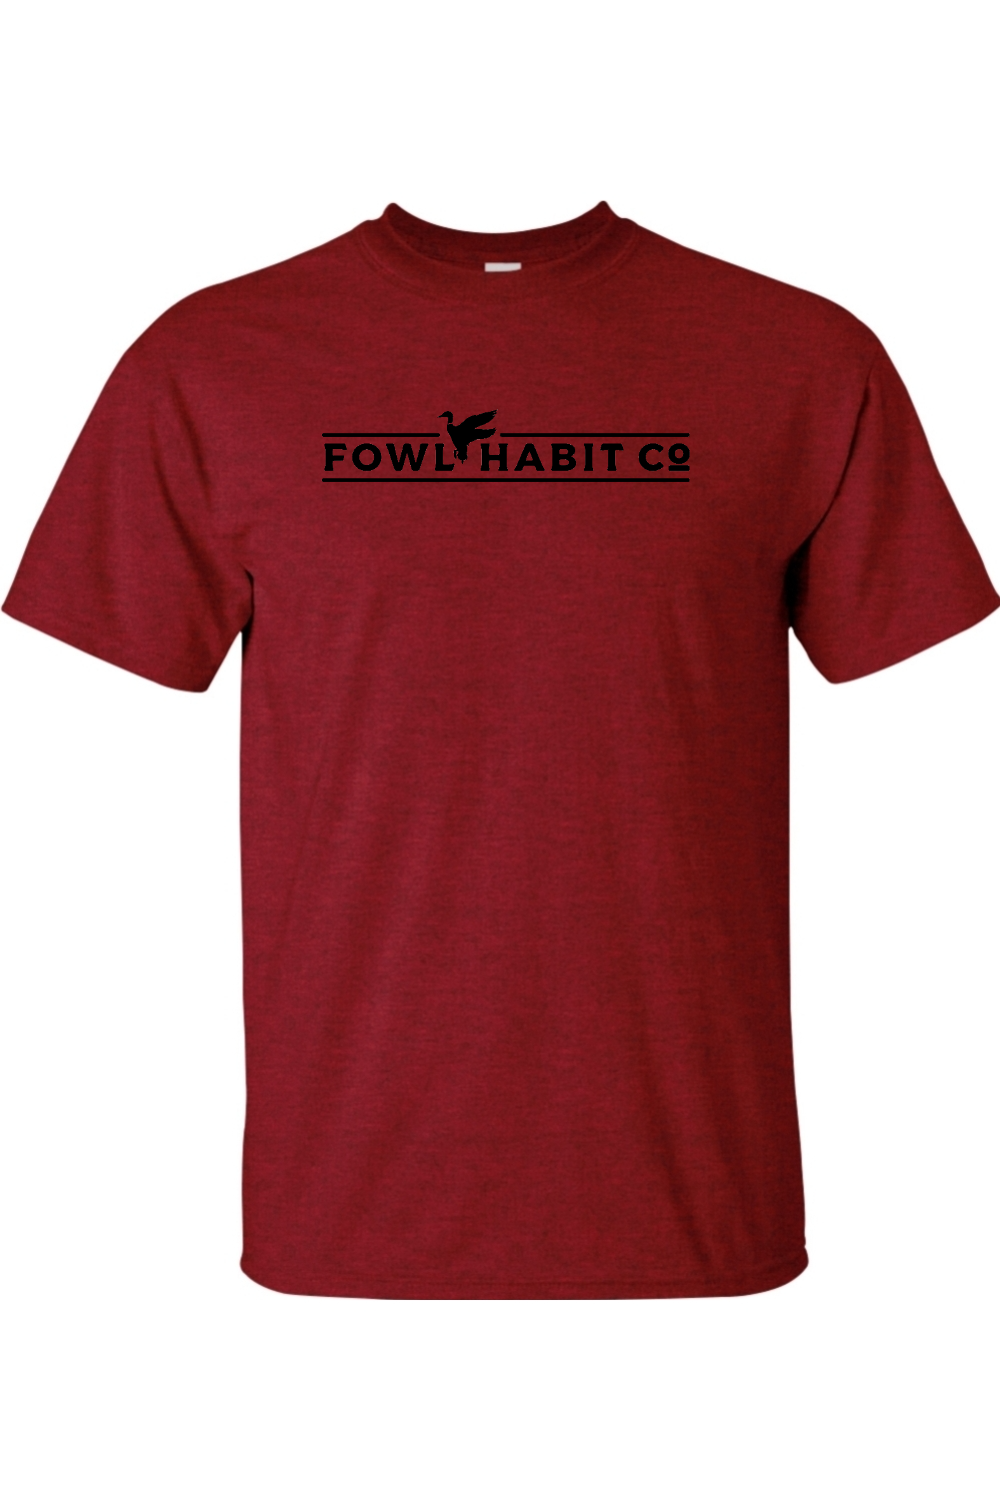 The Brand T-Shirt - Fowl Habit Co.